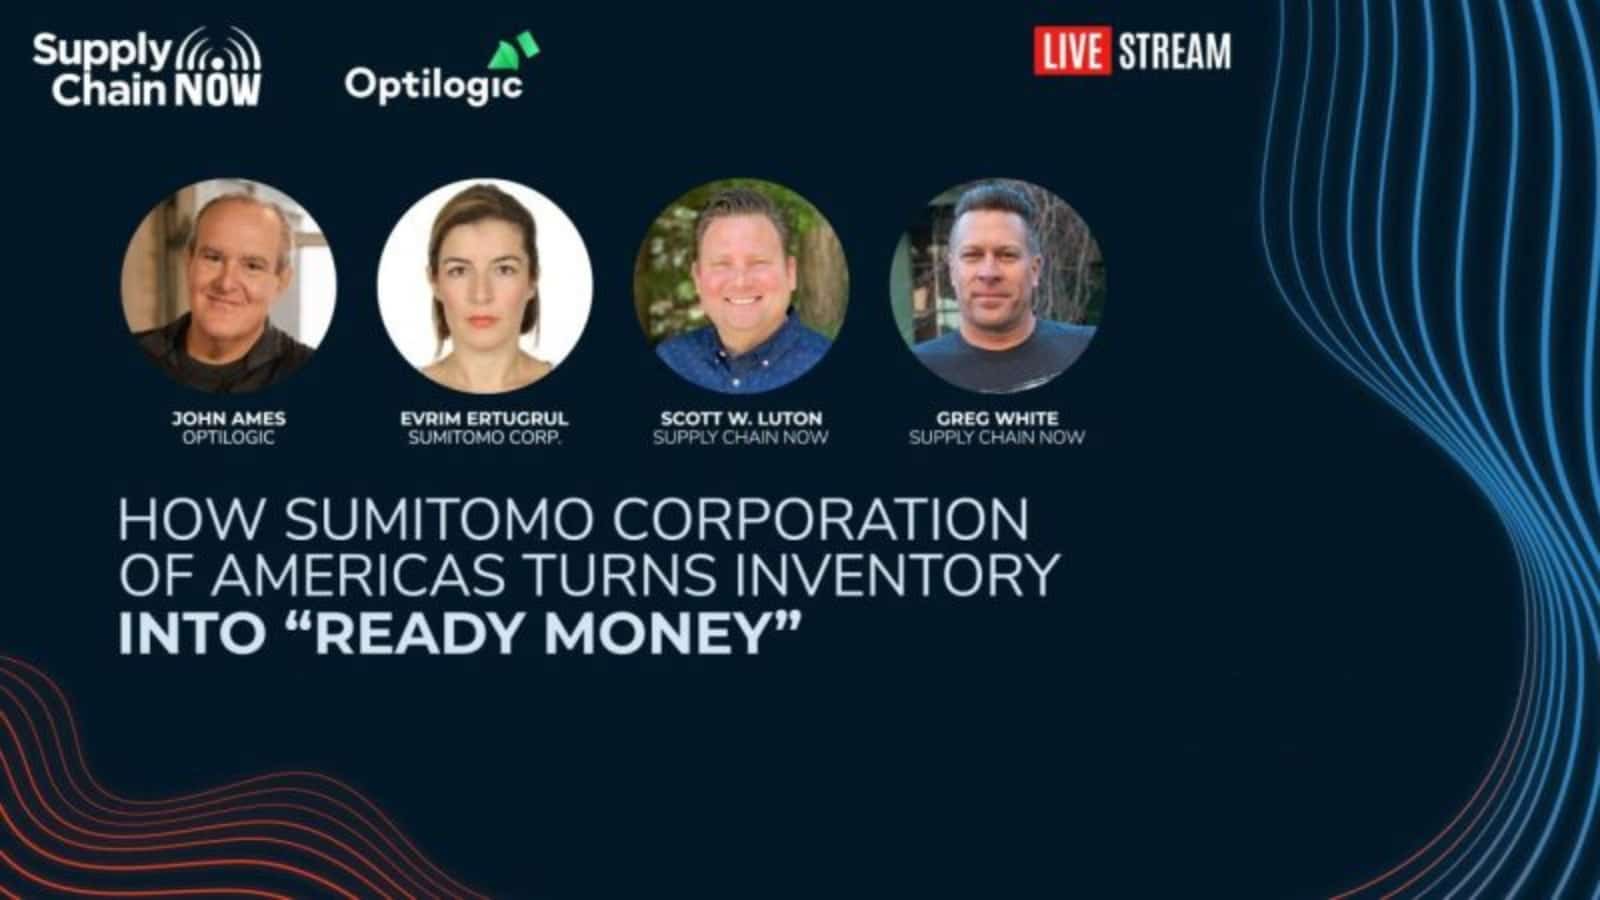 Sumitomo Corporation of America Turns Inventory into “Ready Money”